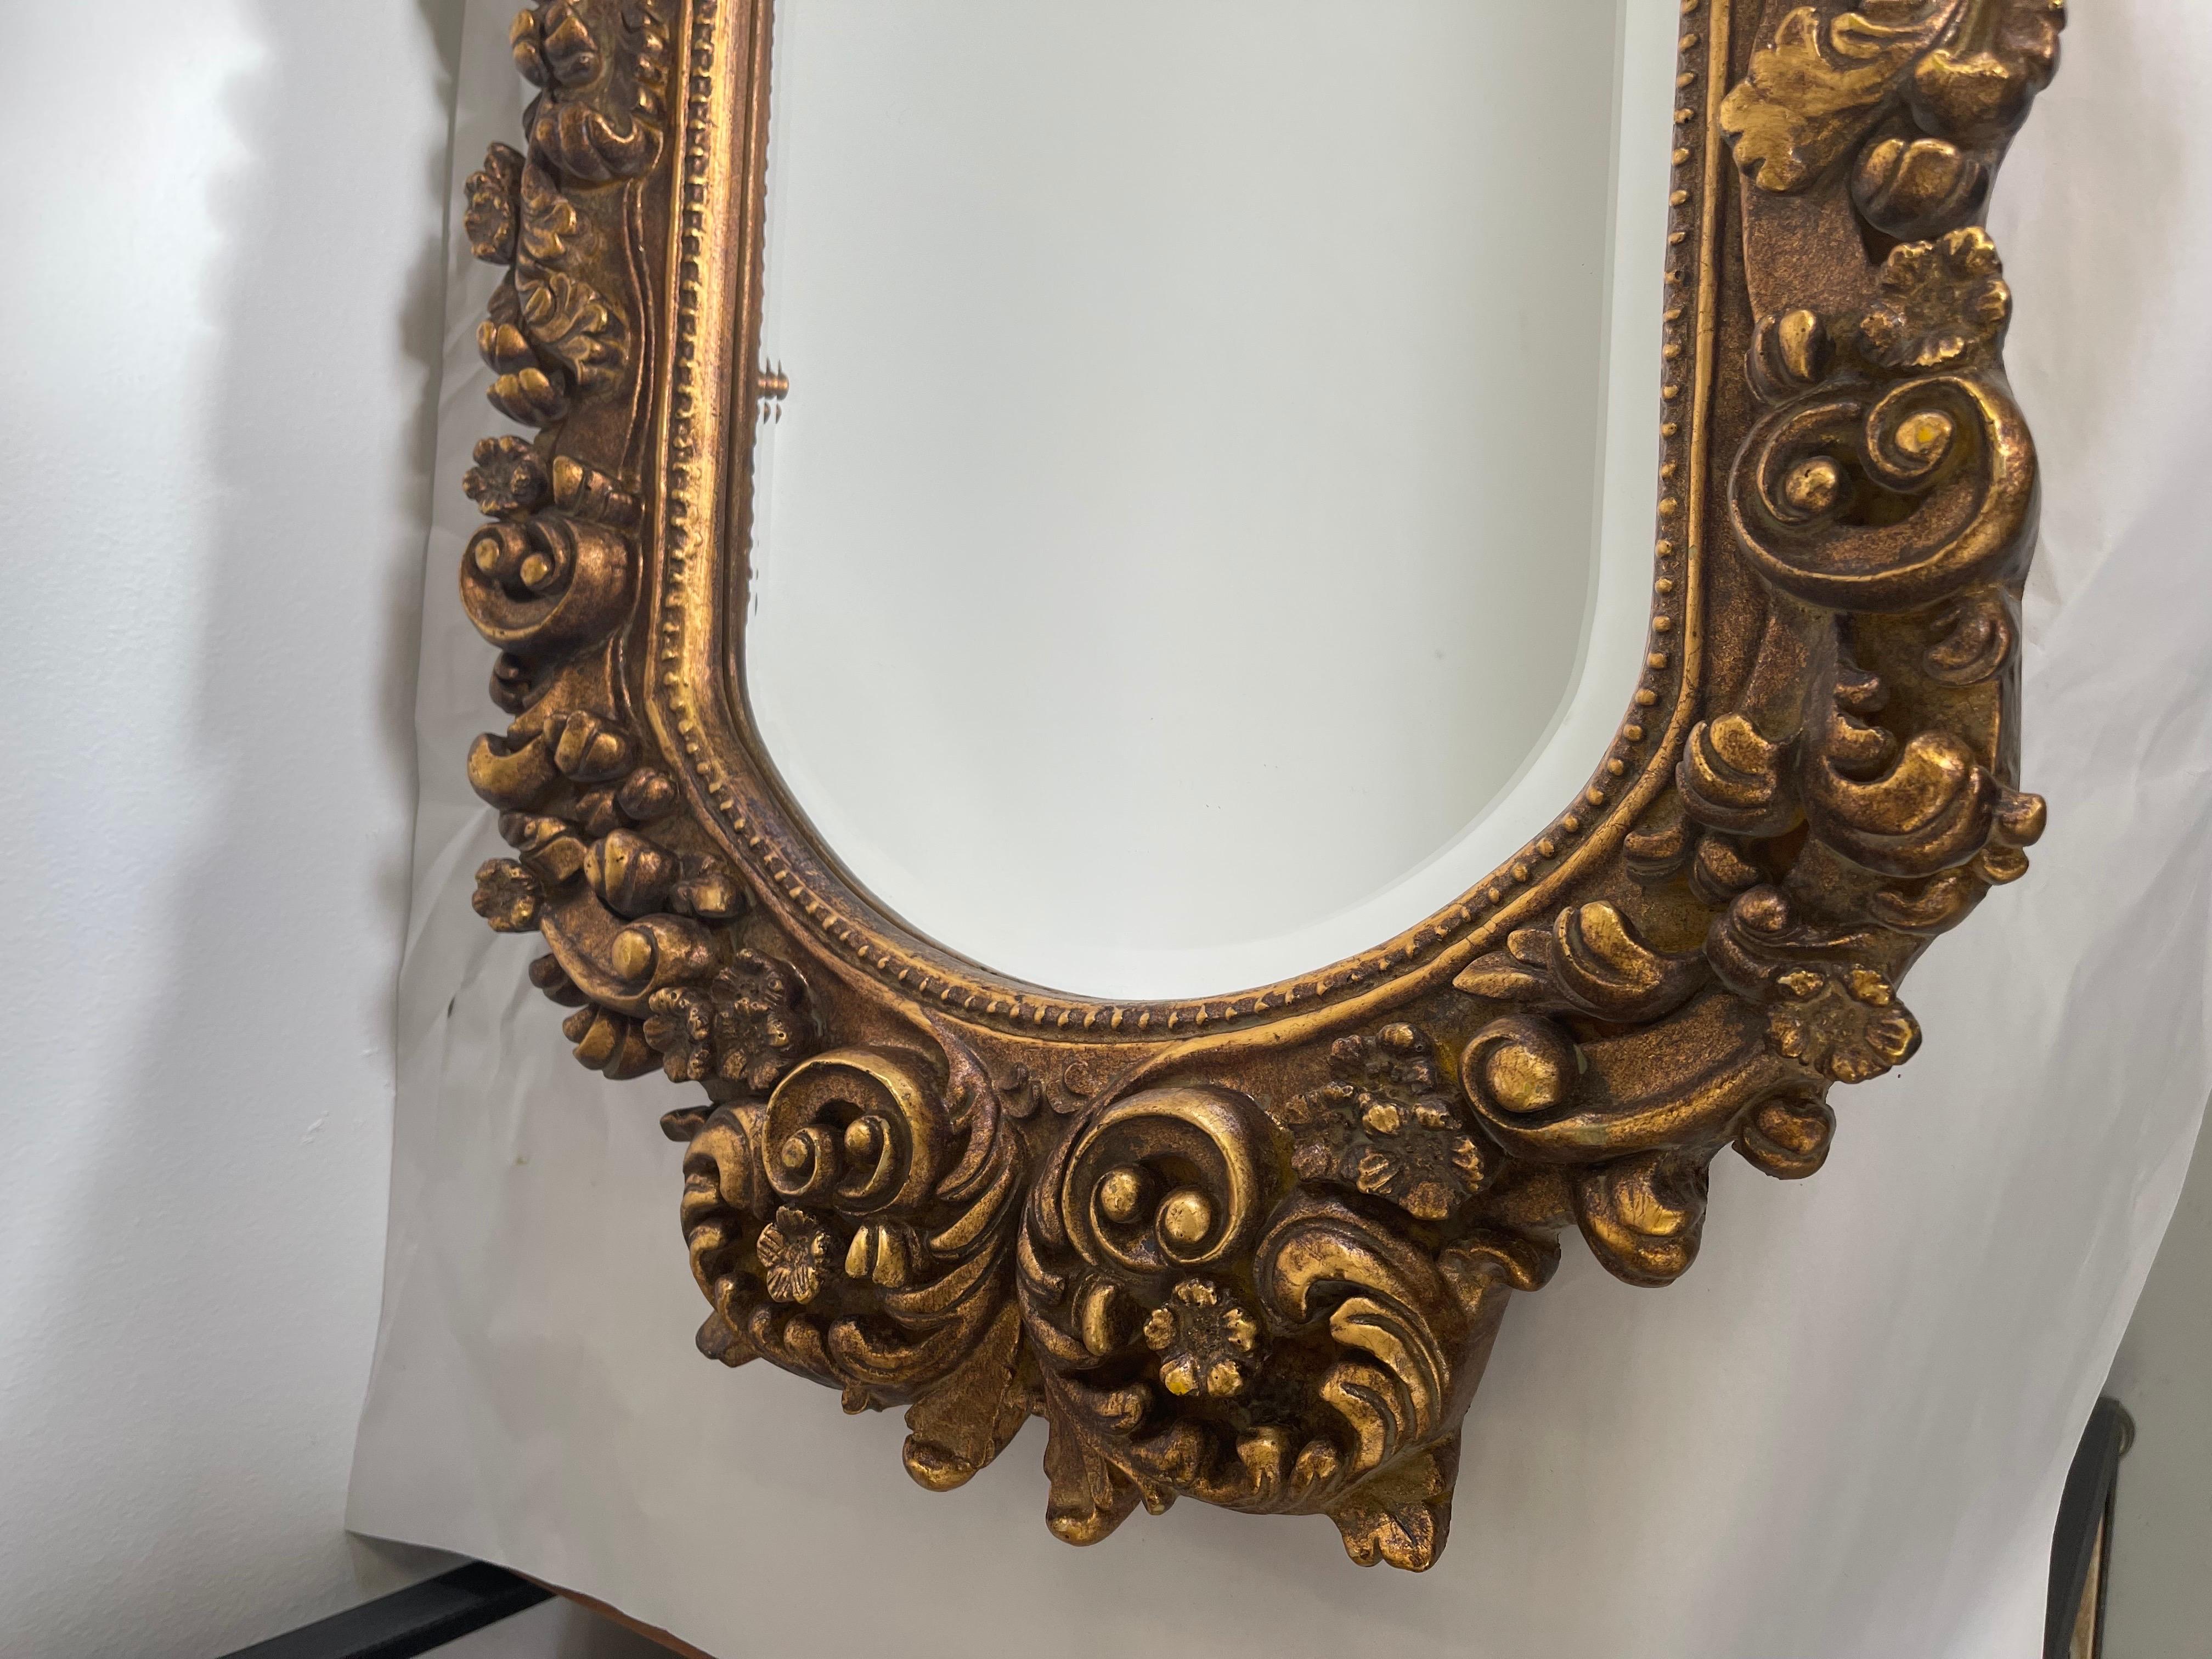 Vintage mirror 

Dimensions 18 W ; 23 1/2 H ; 2 D.